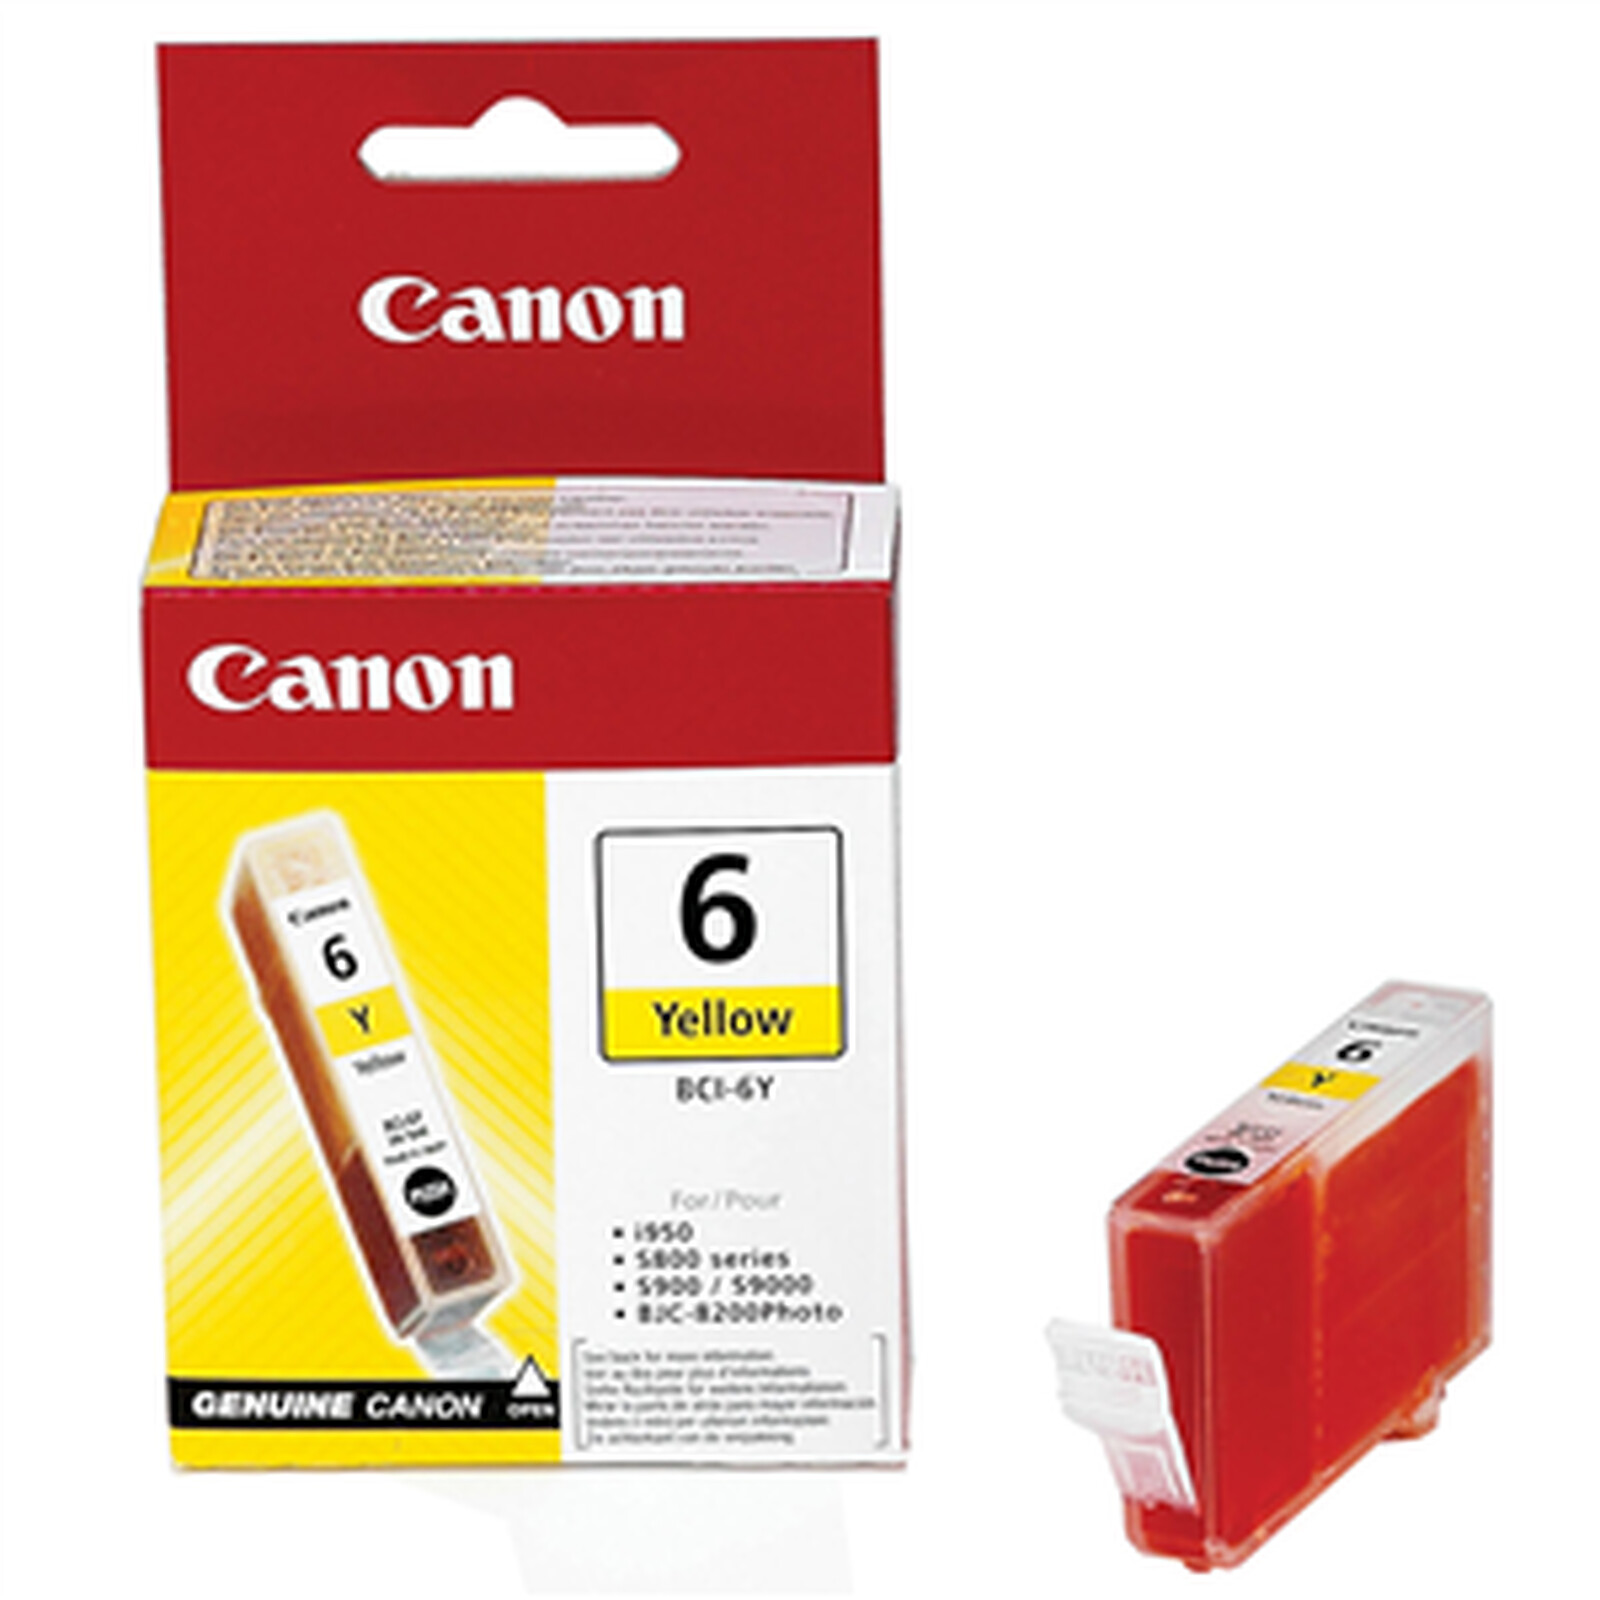 canon i560 printer yellow flashing light 6 times